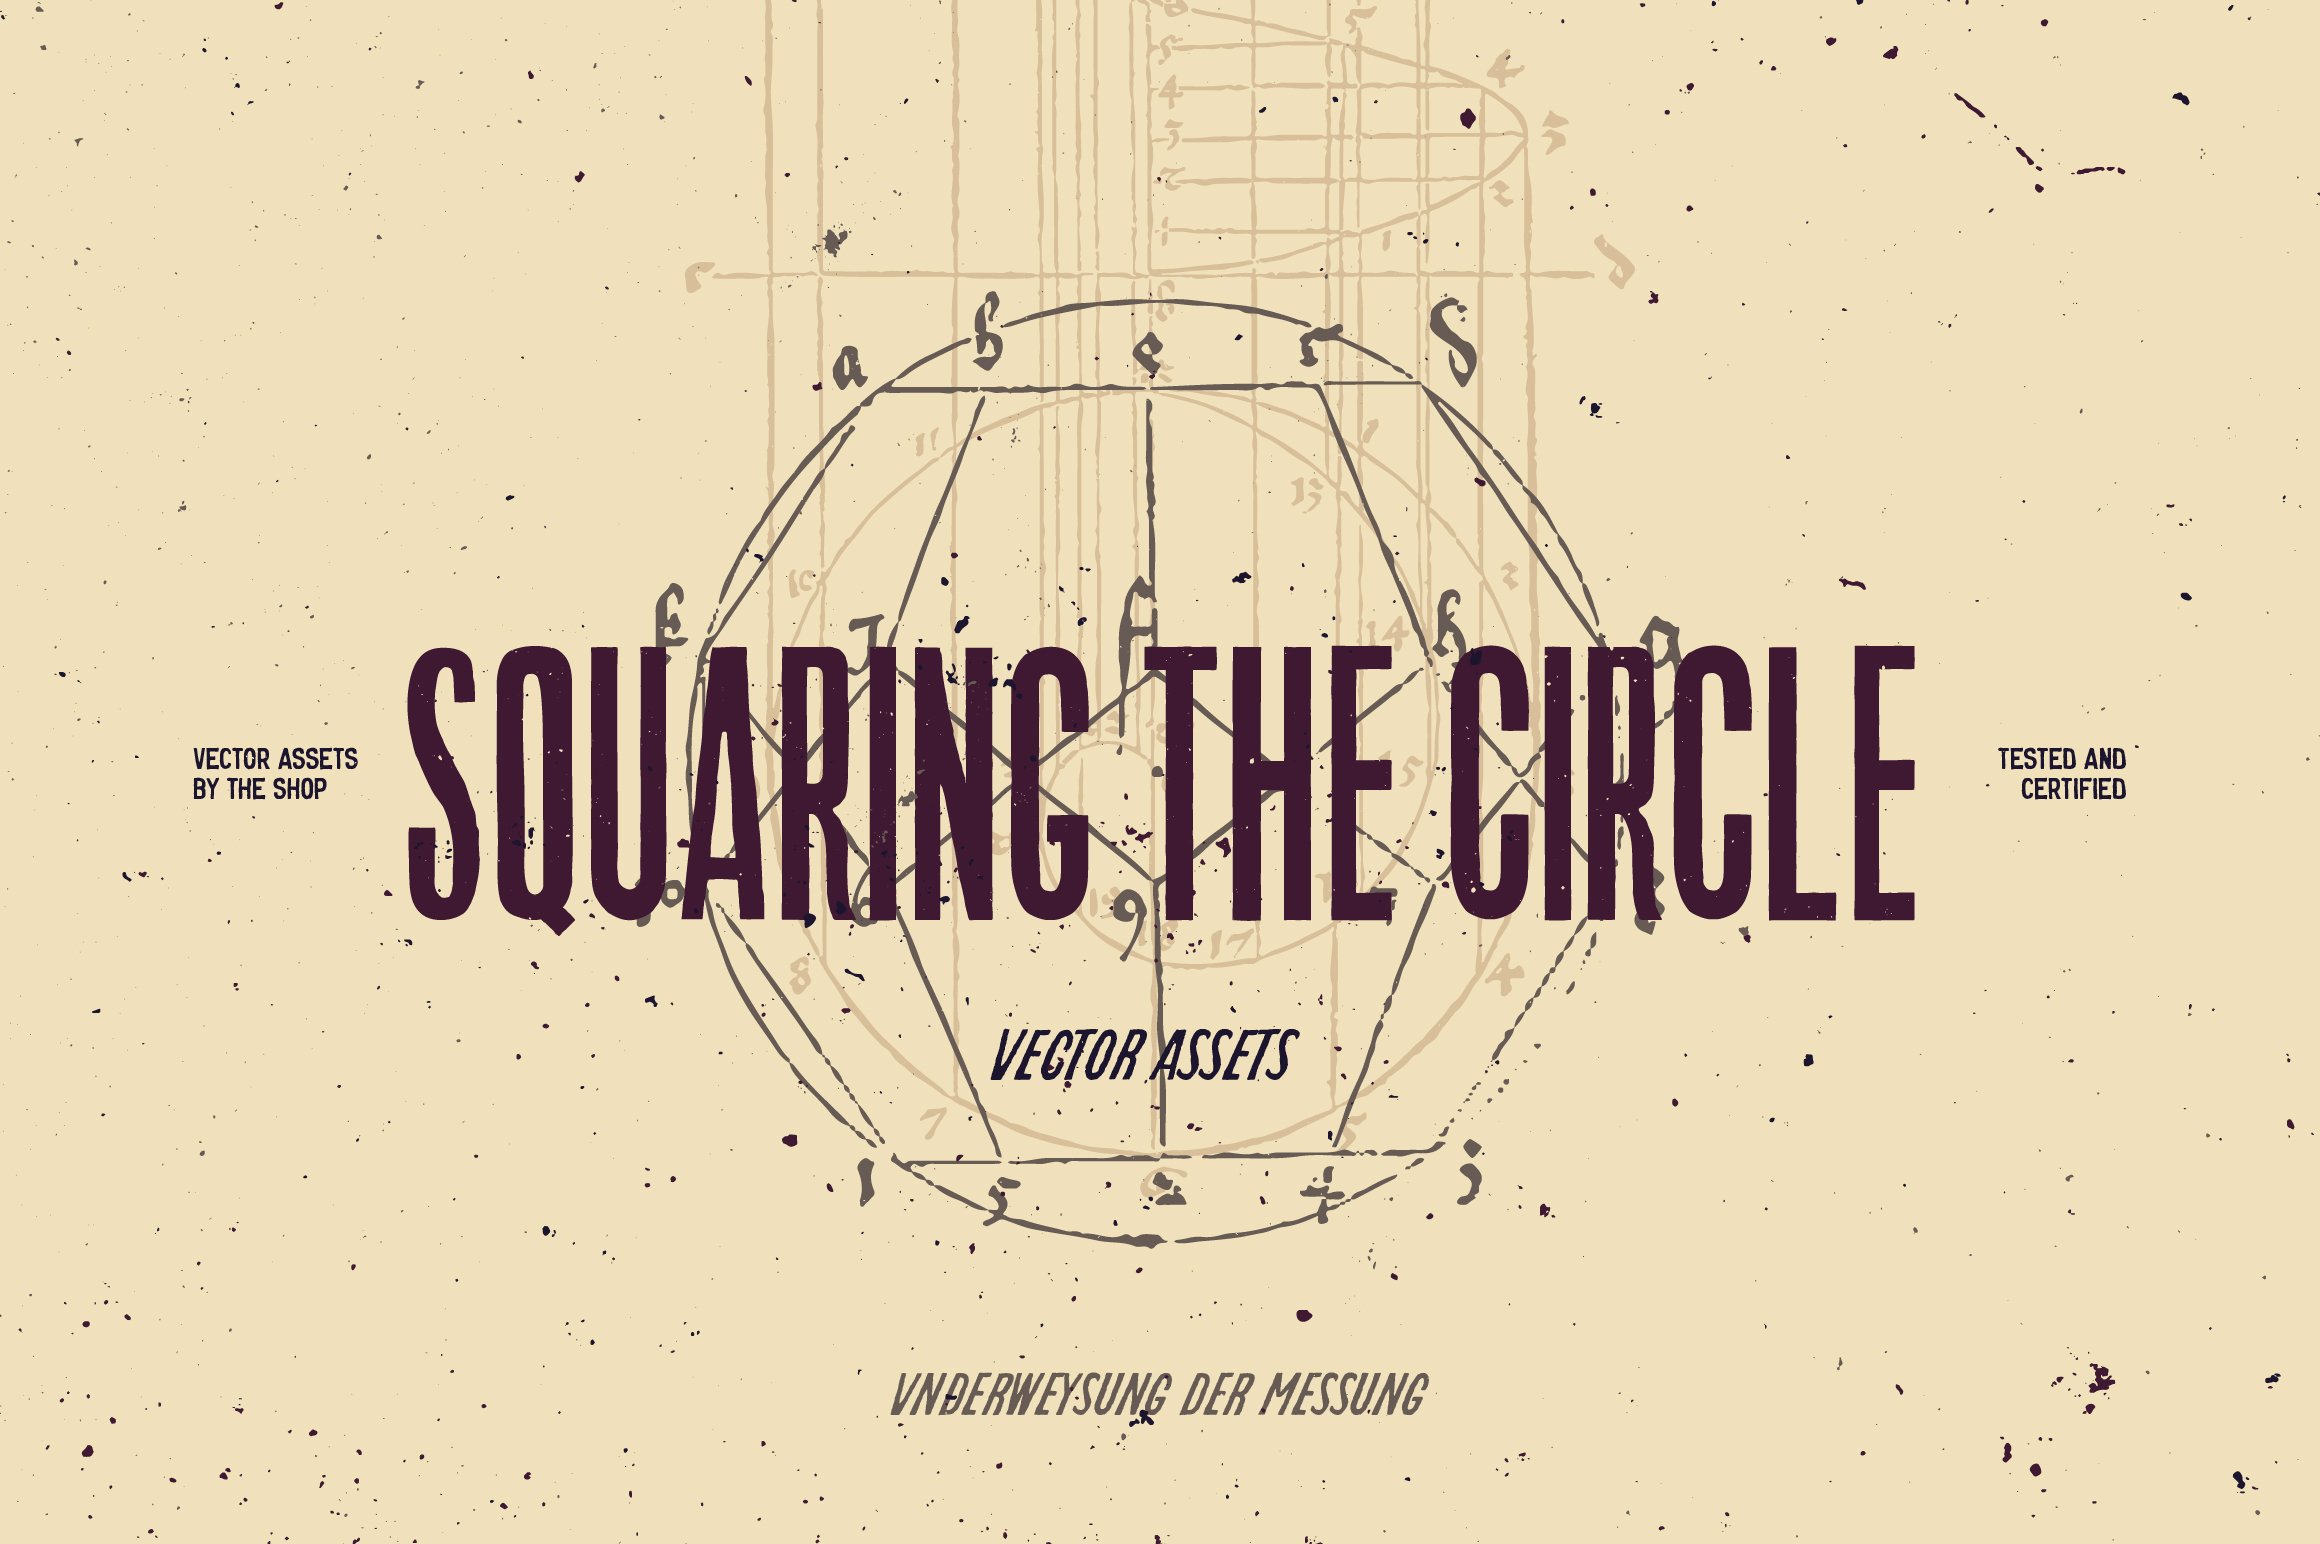 Squaring The Circle Vector Assets